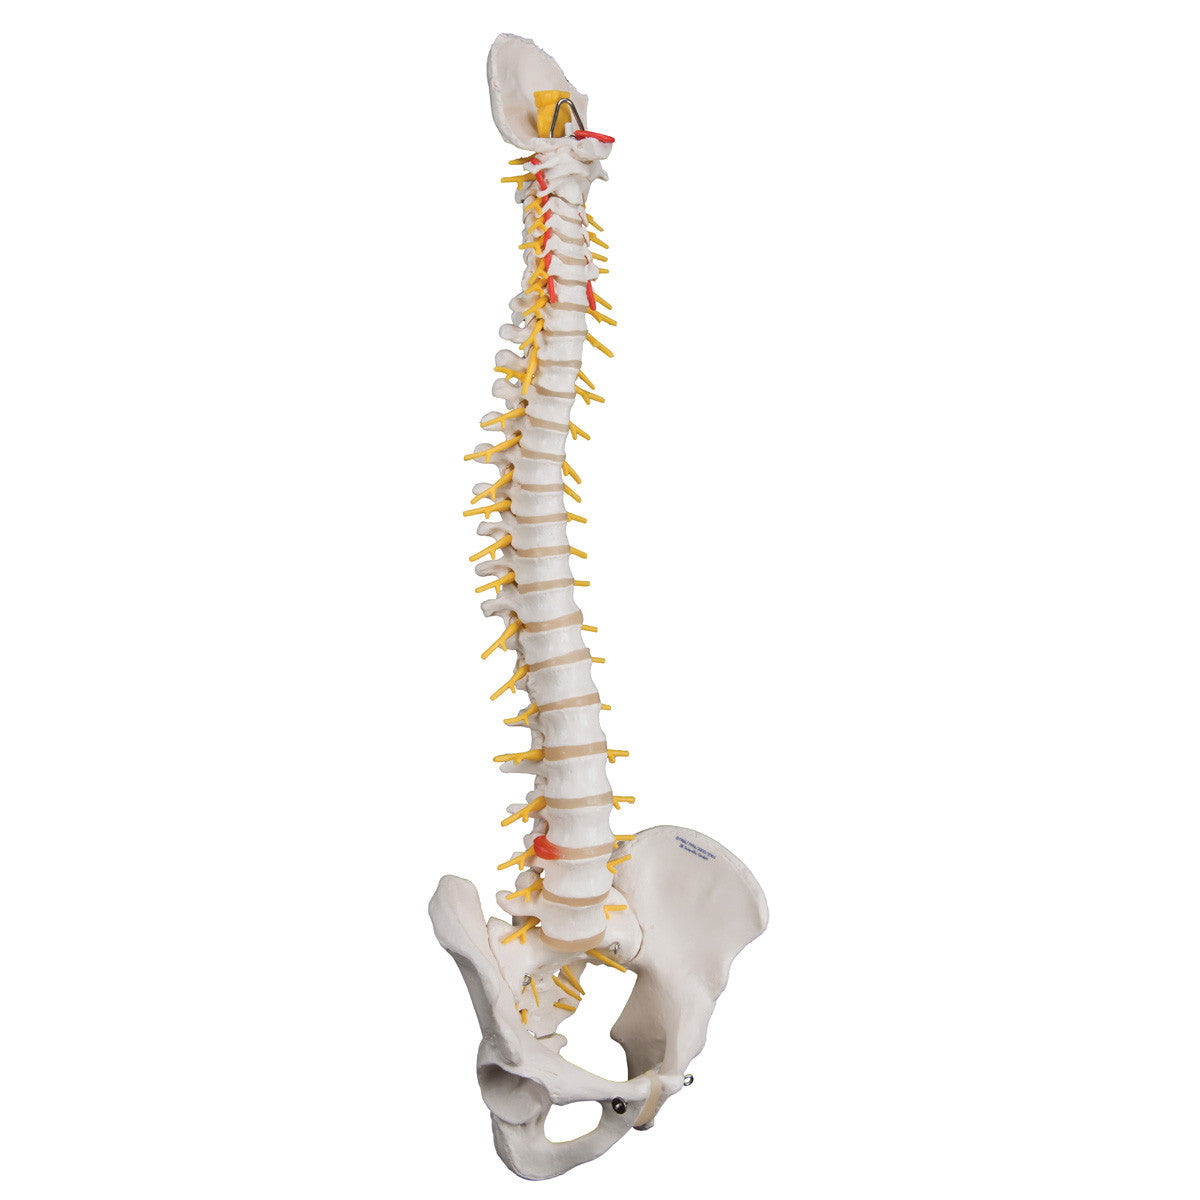 a58-5_02_1200_1200_deluxe-flexible-human-spine-model-3b-smart-anatomy__44872.1589753190.1280.1280.jpg